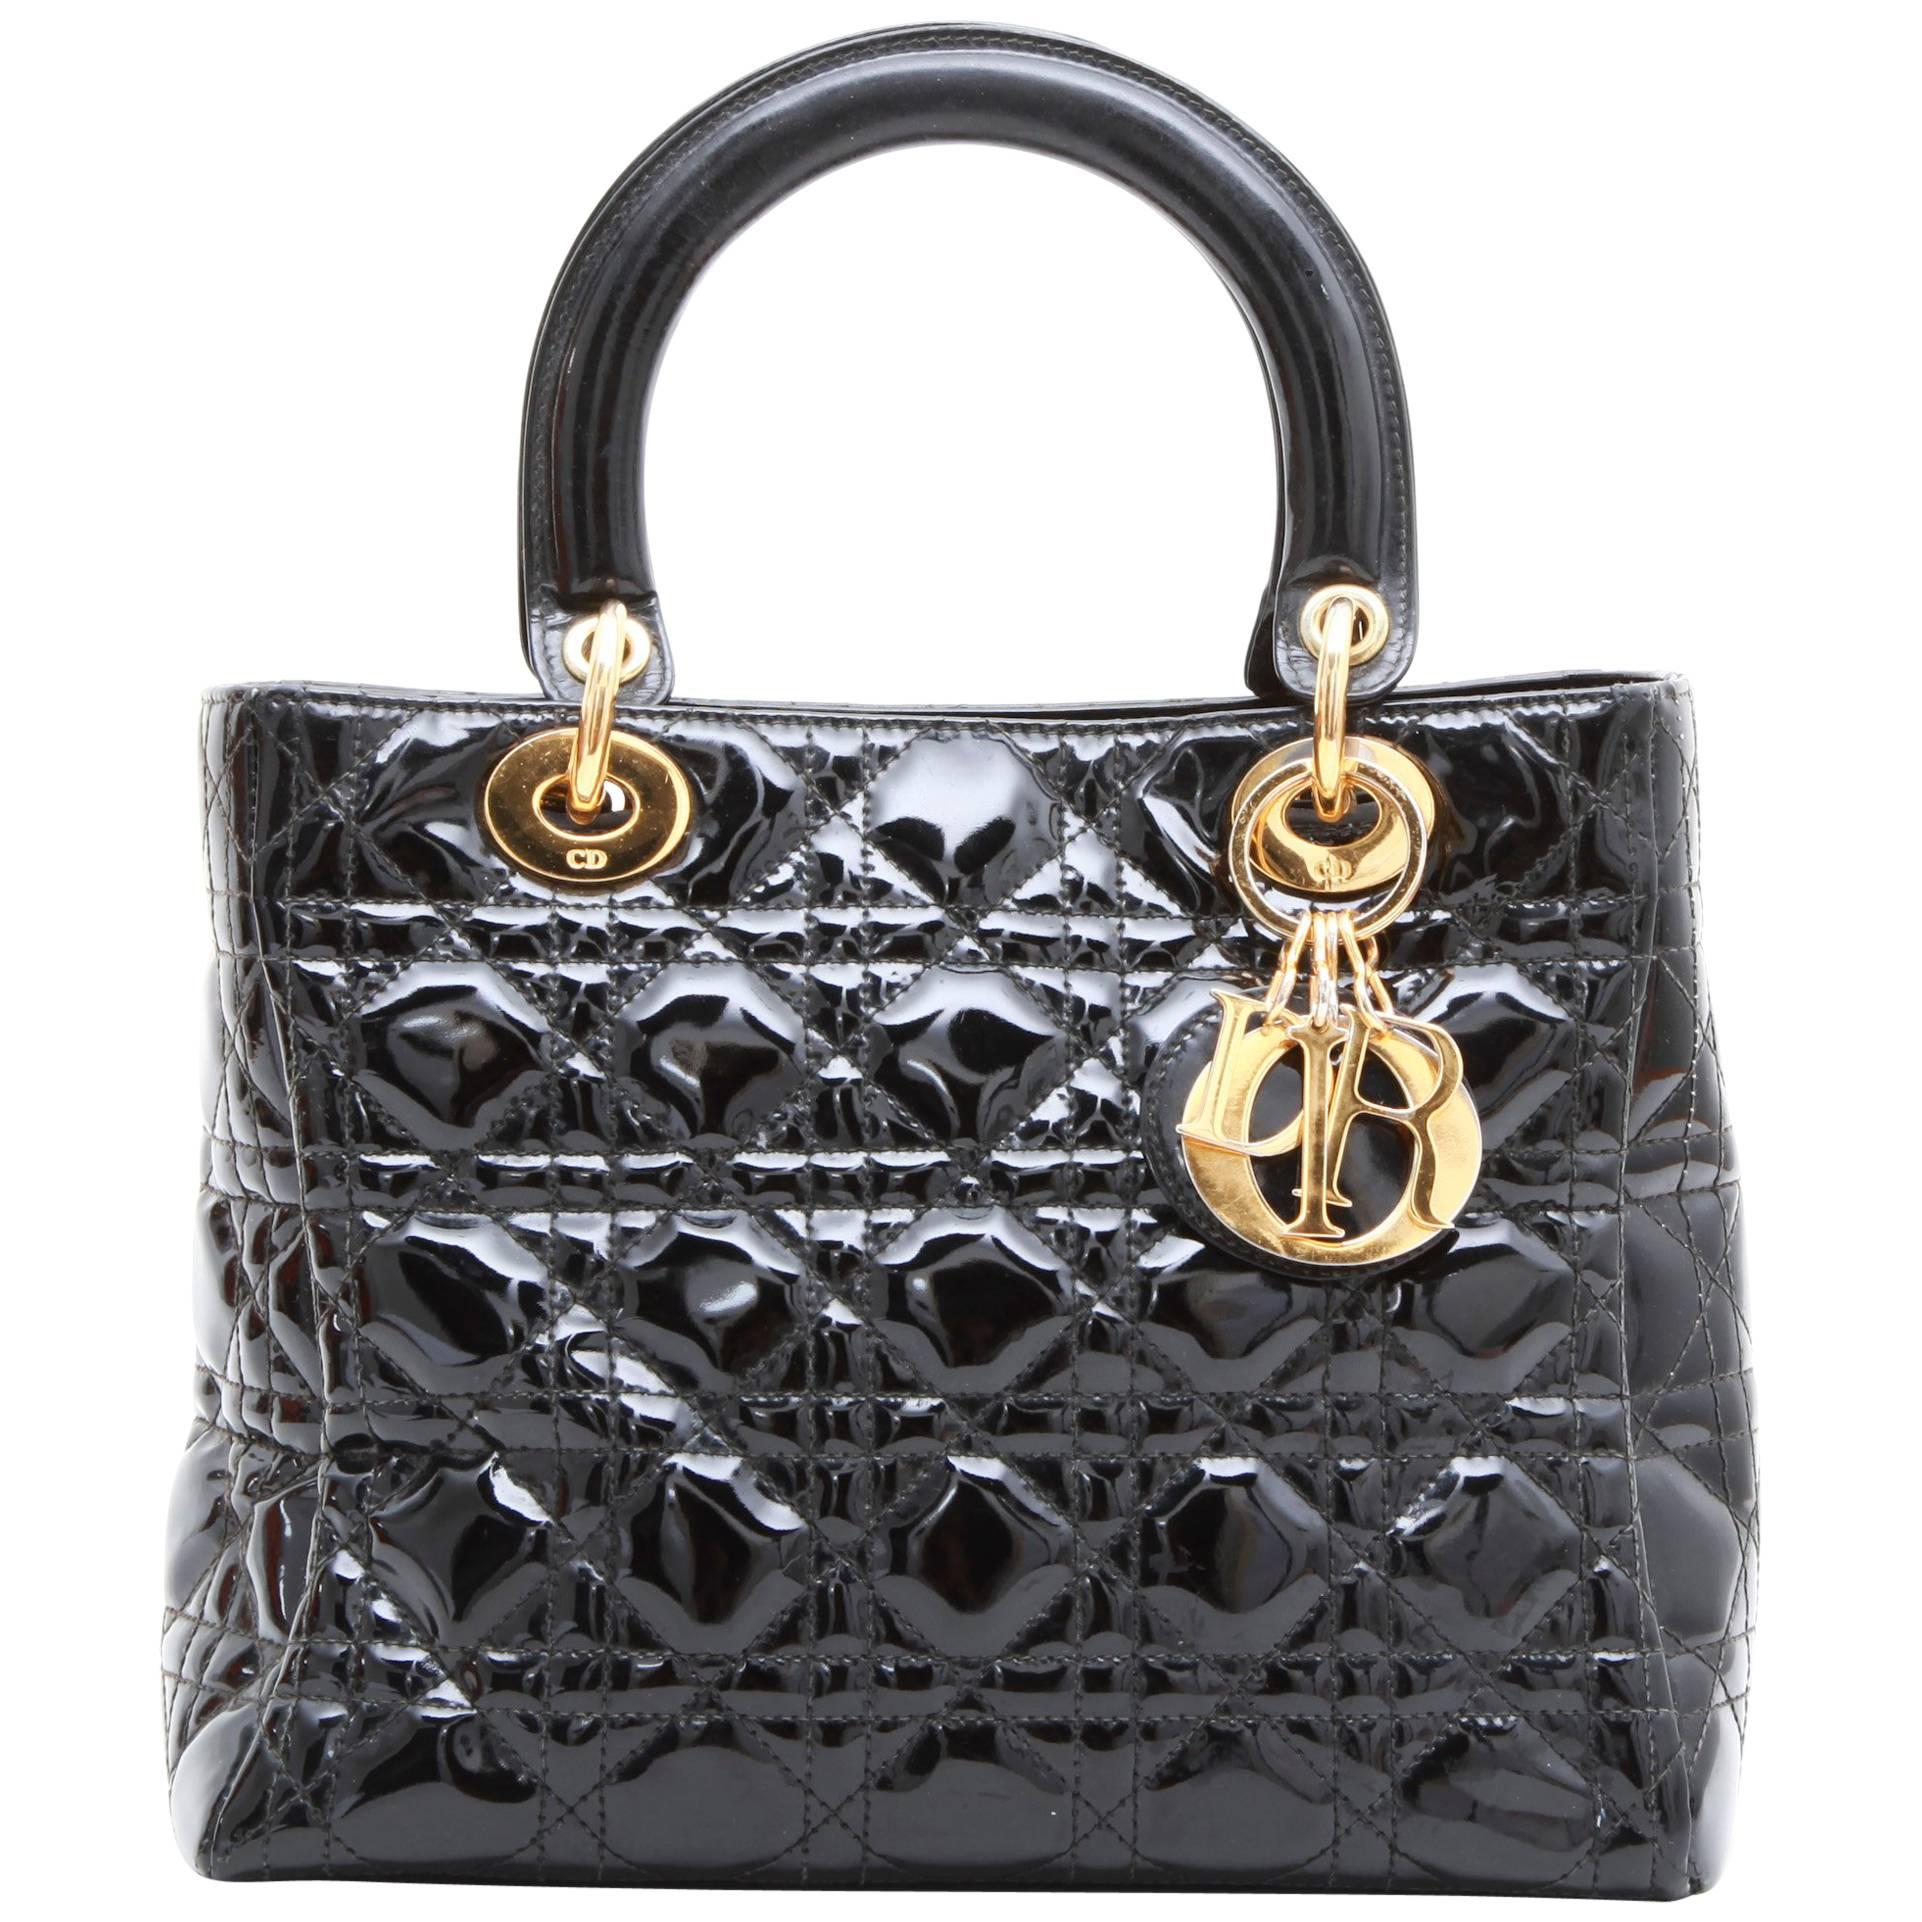 CHRISTIAN DIOR 'Lady Dior' Vintage Handbag in Black Patent Leather